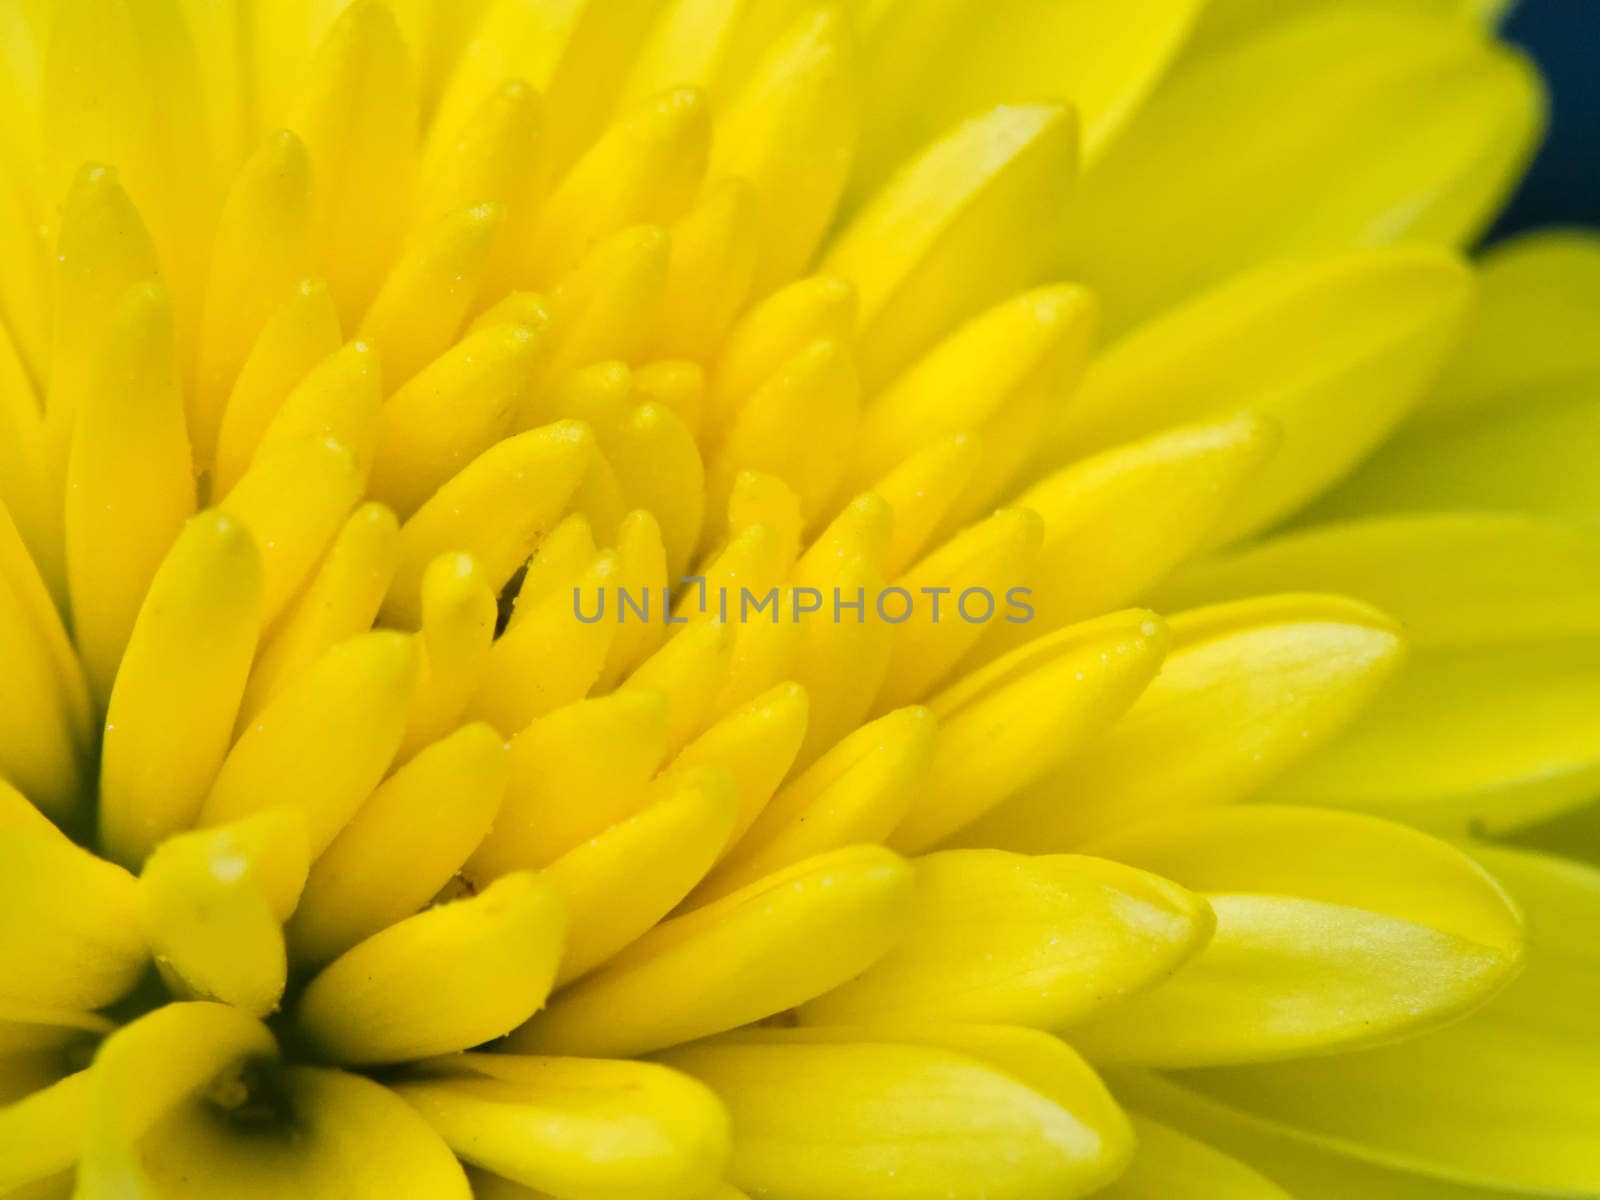 Chrysanthemum Daisy Close-up Shot, vibrant and bright